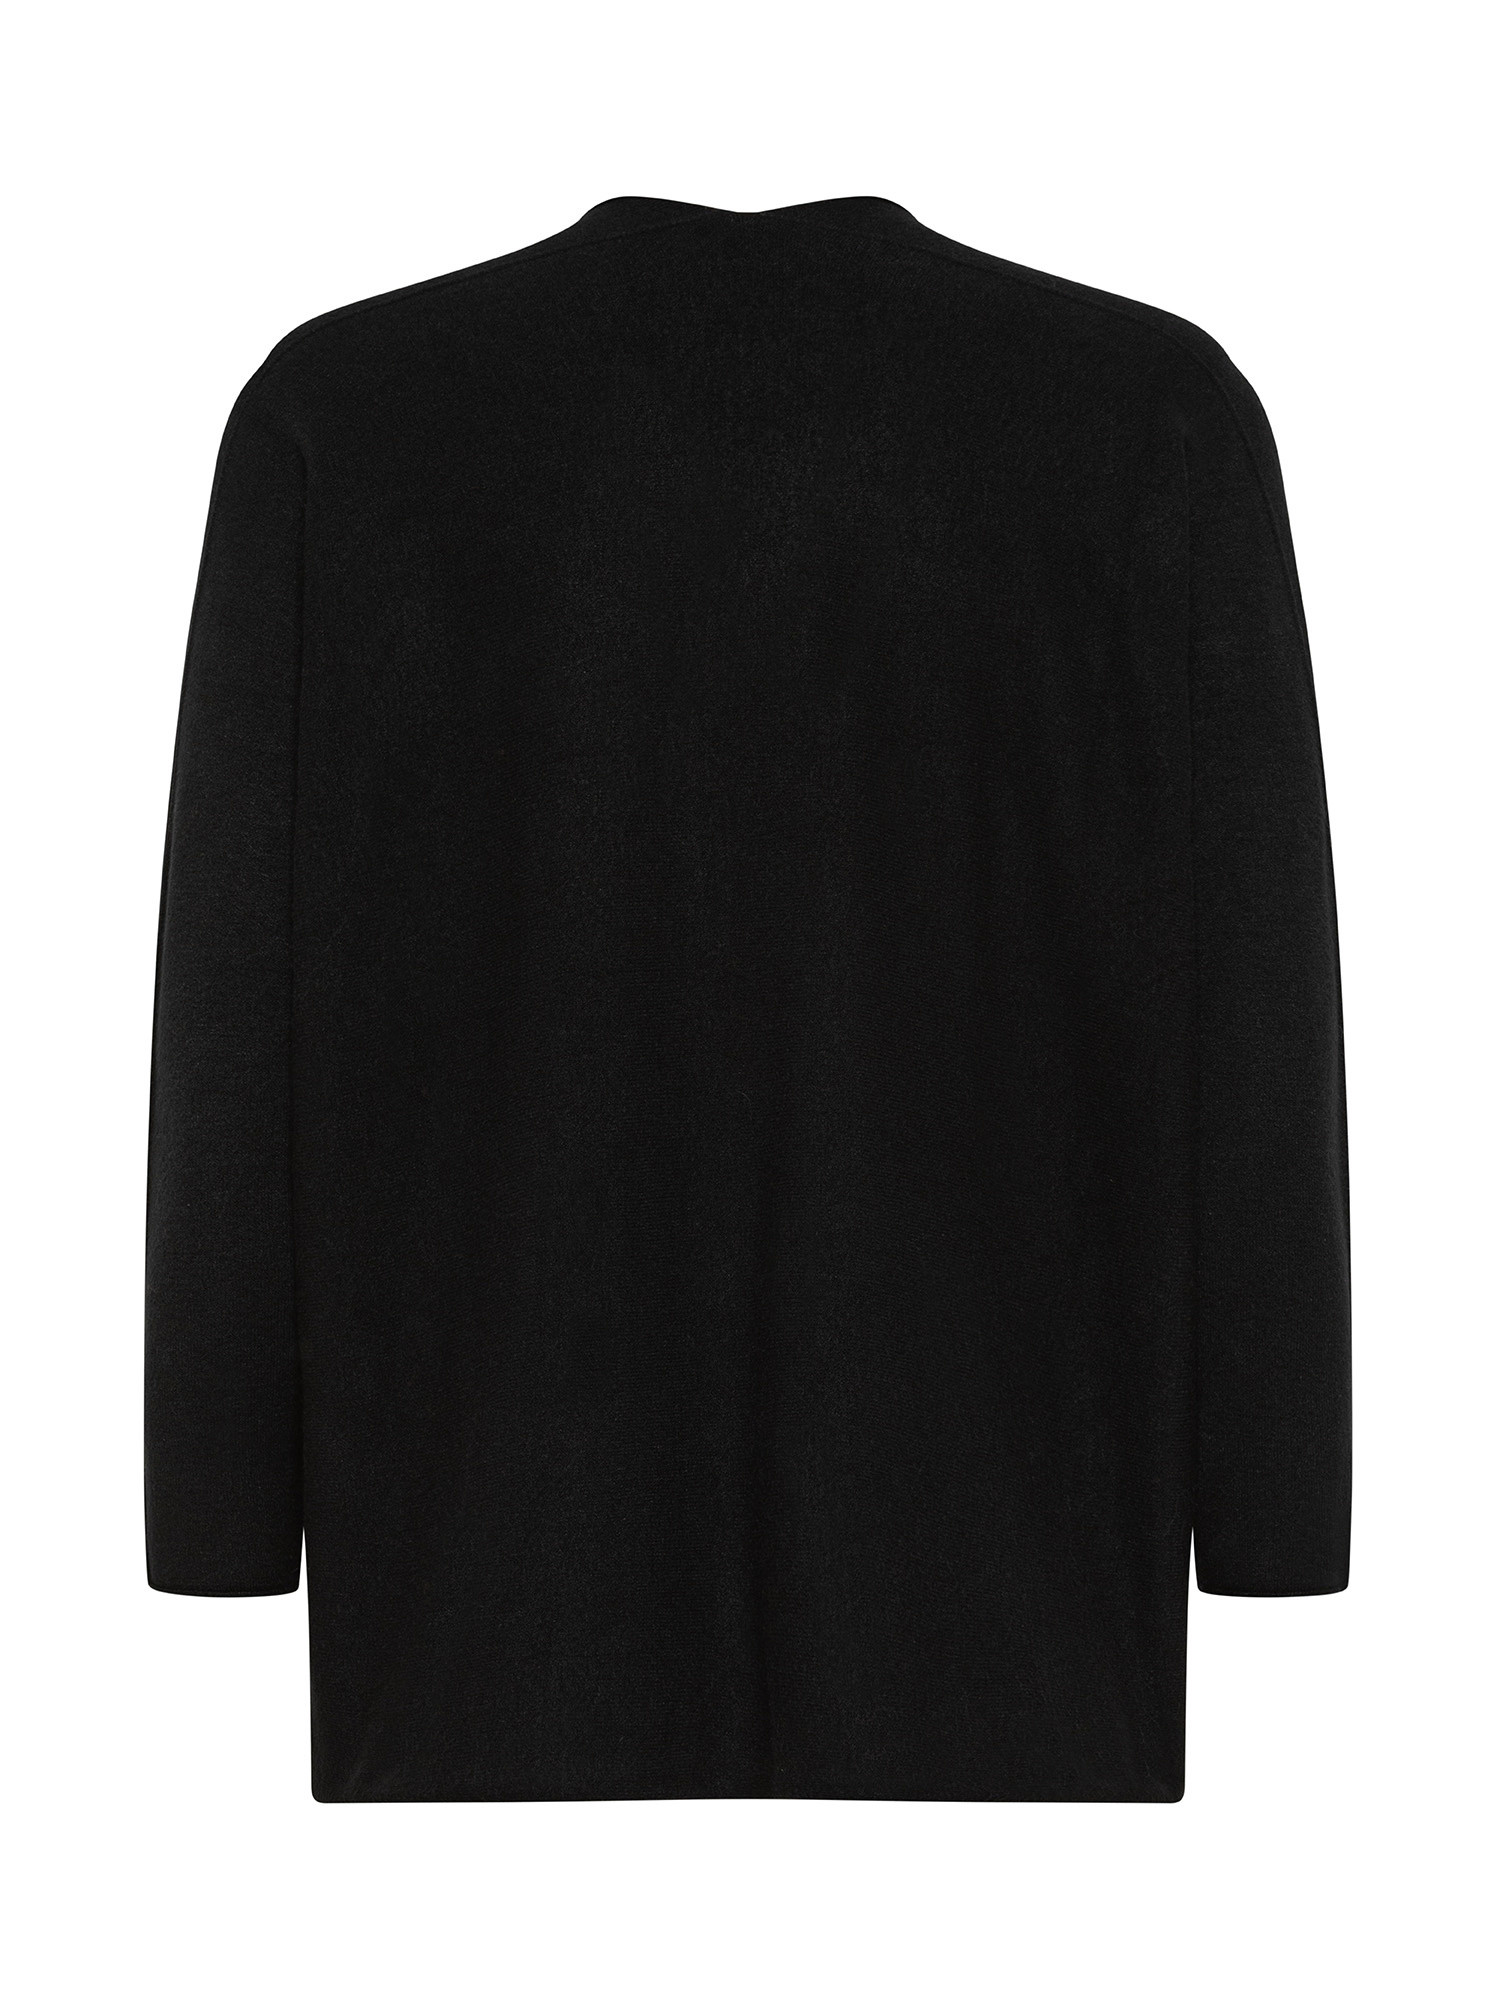 K Collection - Pullover, Black, large image number 1